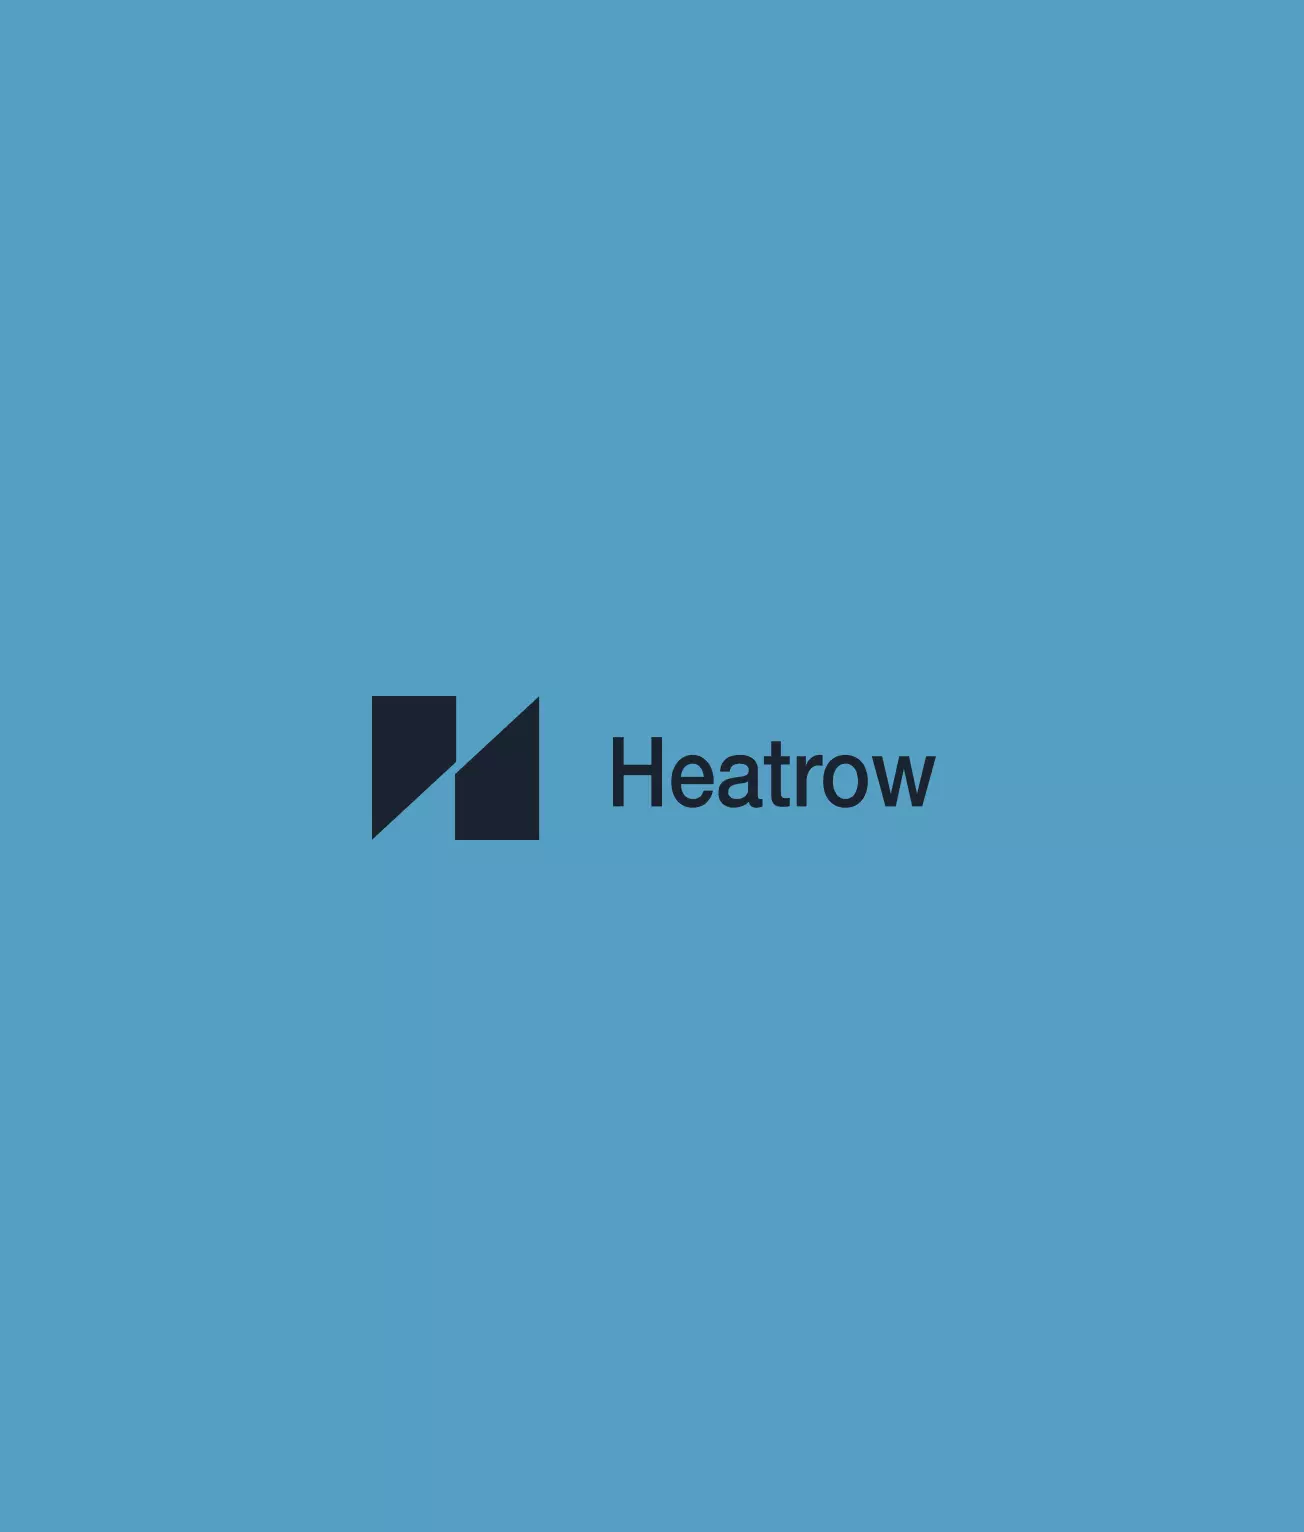 heatrow logo